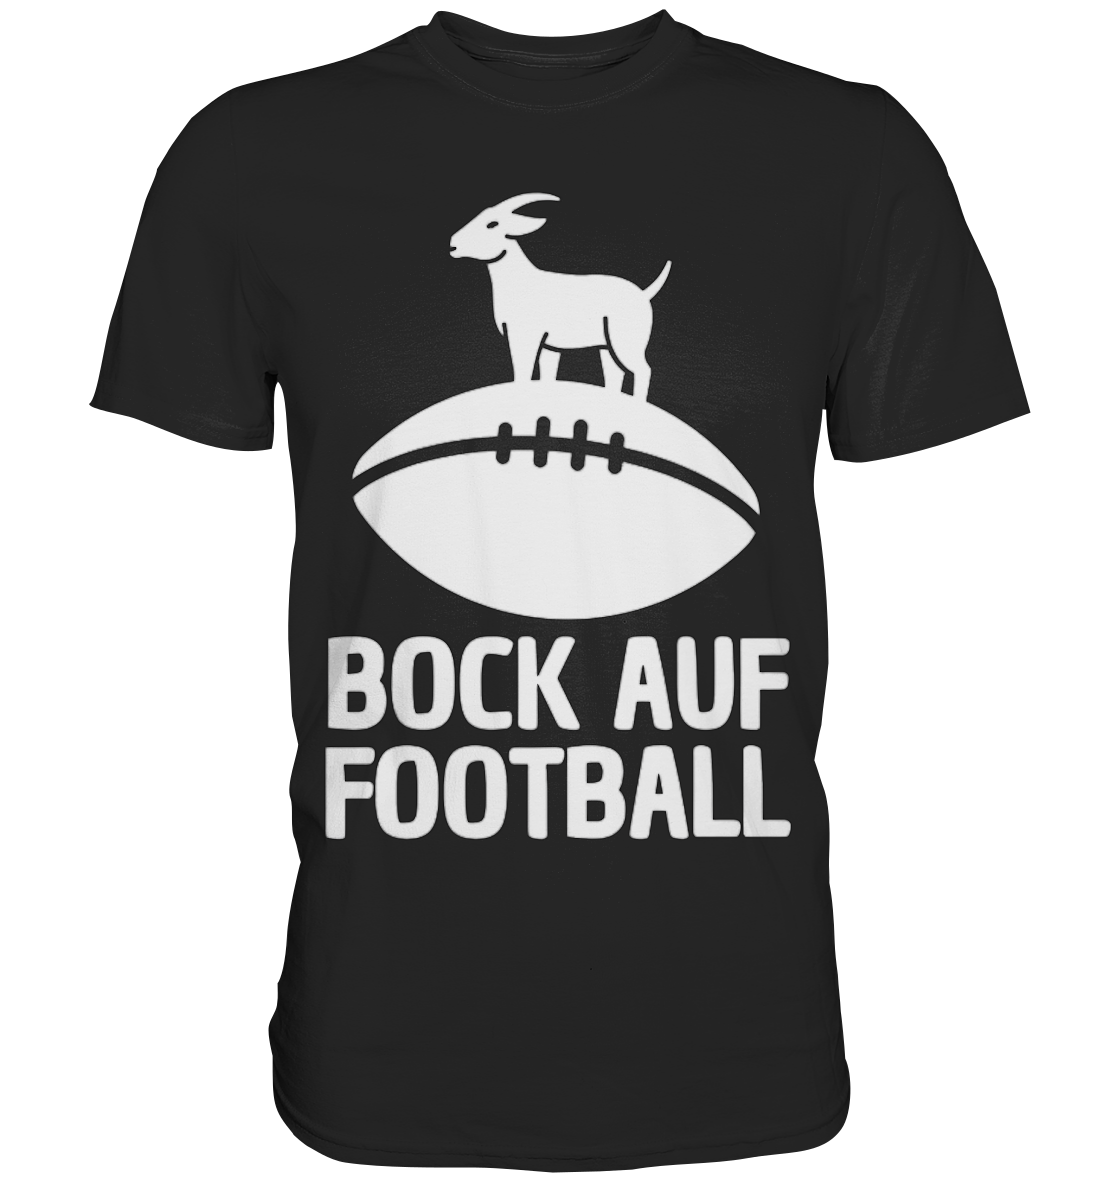 Bock auf Football - Premium Shirt - Football Unity Football Unity